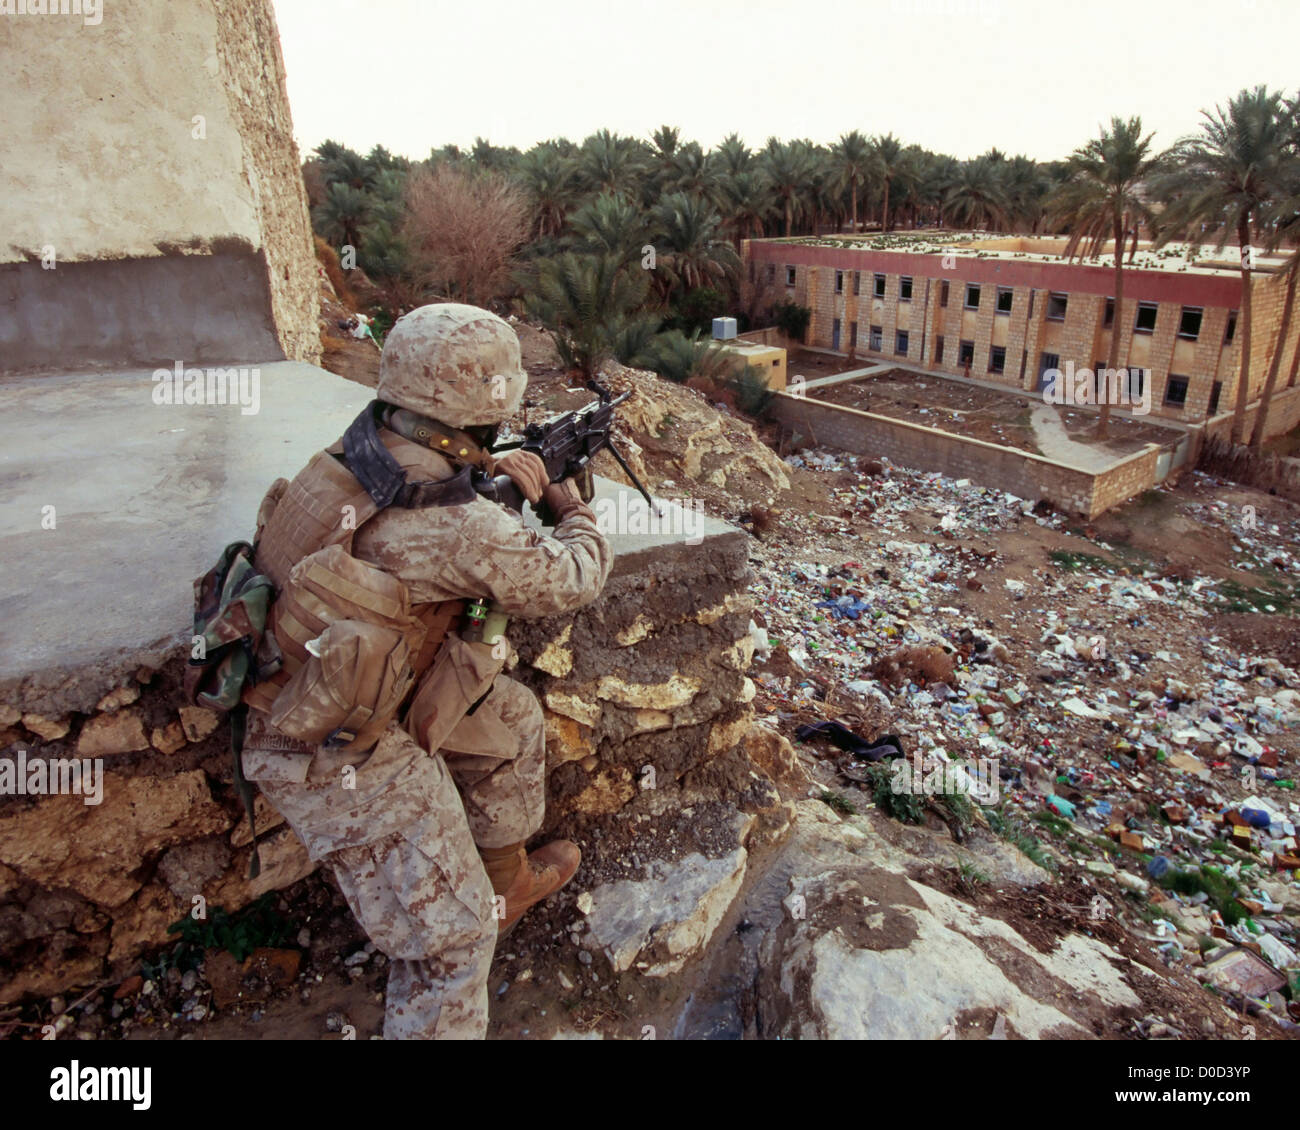 US Marine Provides Cover During a Combat Patrol in Haqlaniyah, Iraq Stock Photo